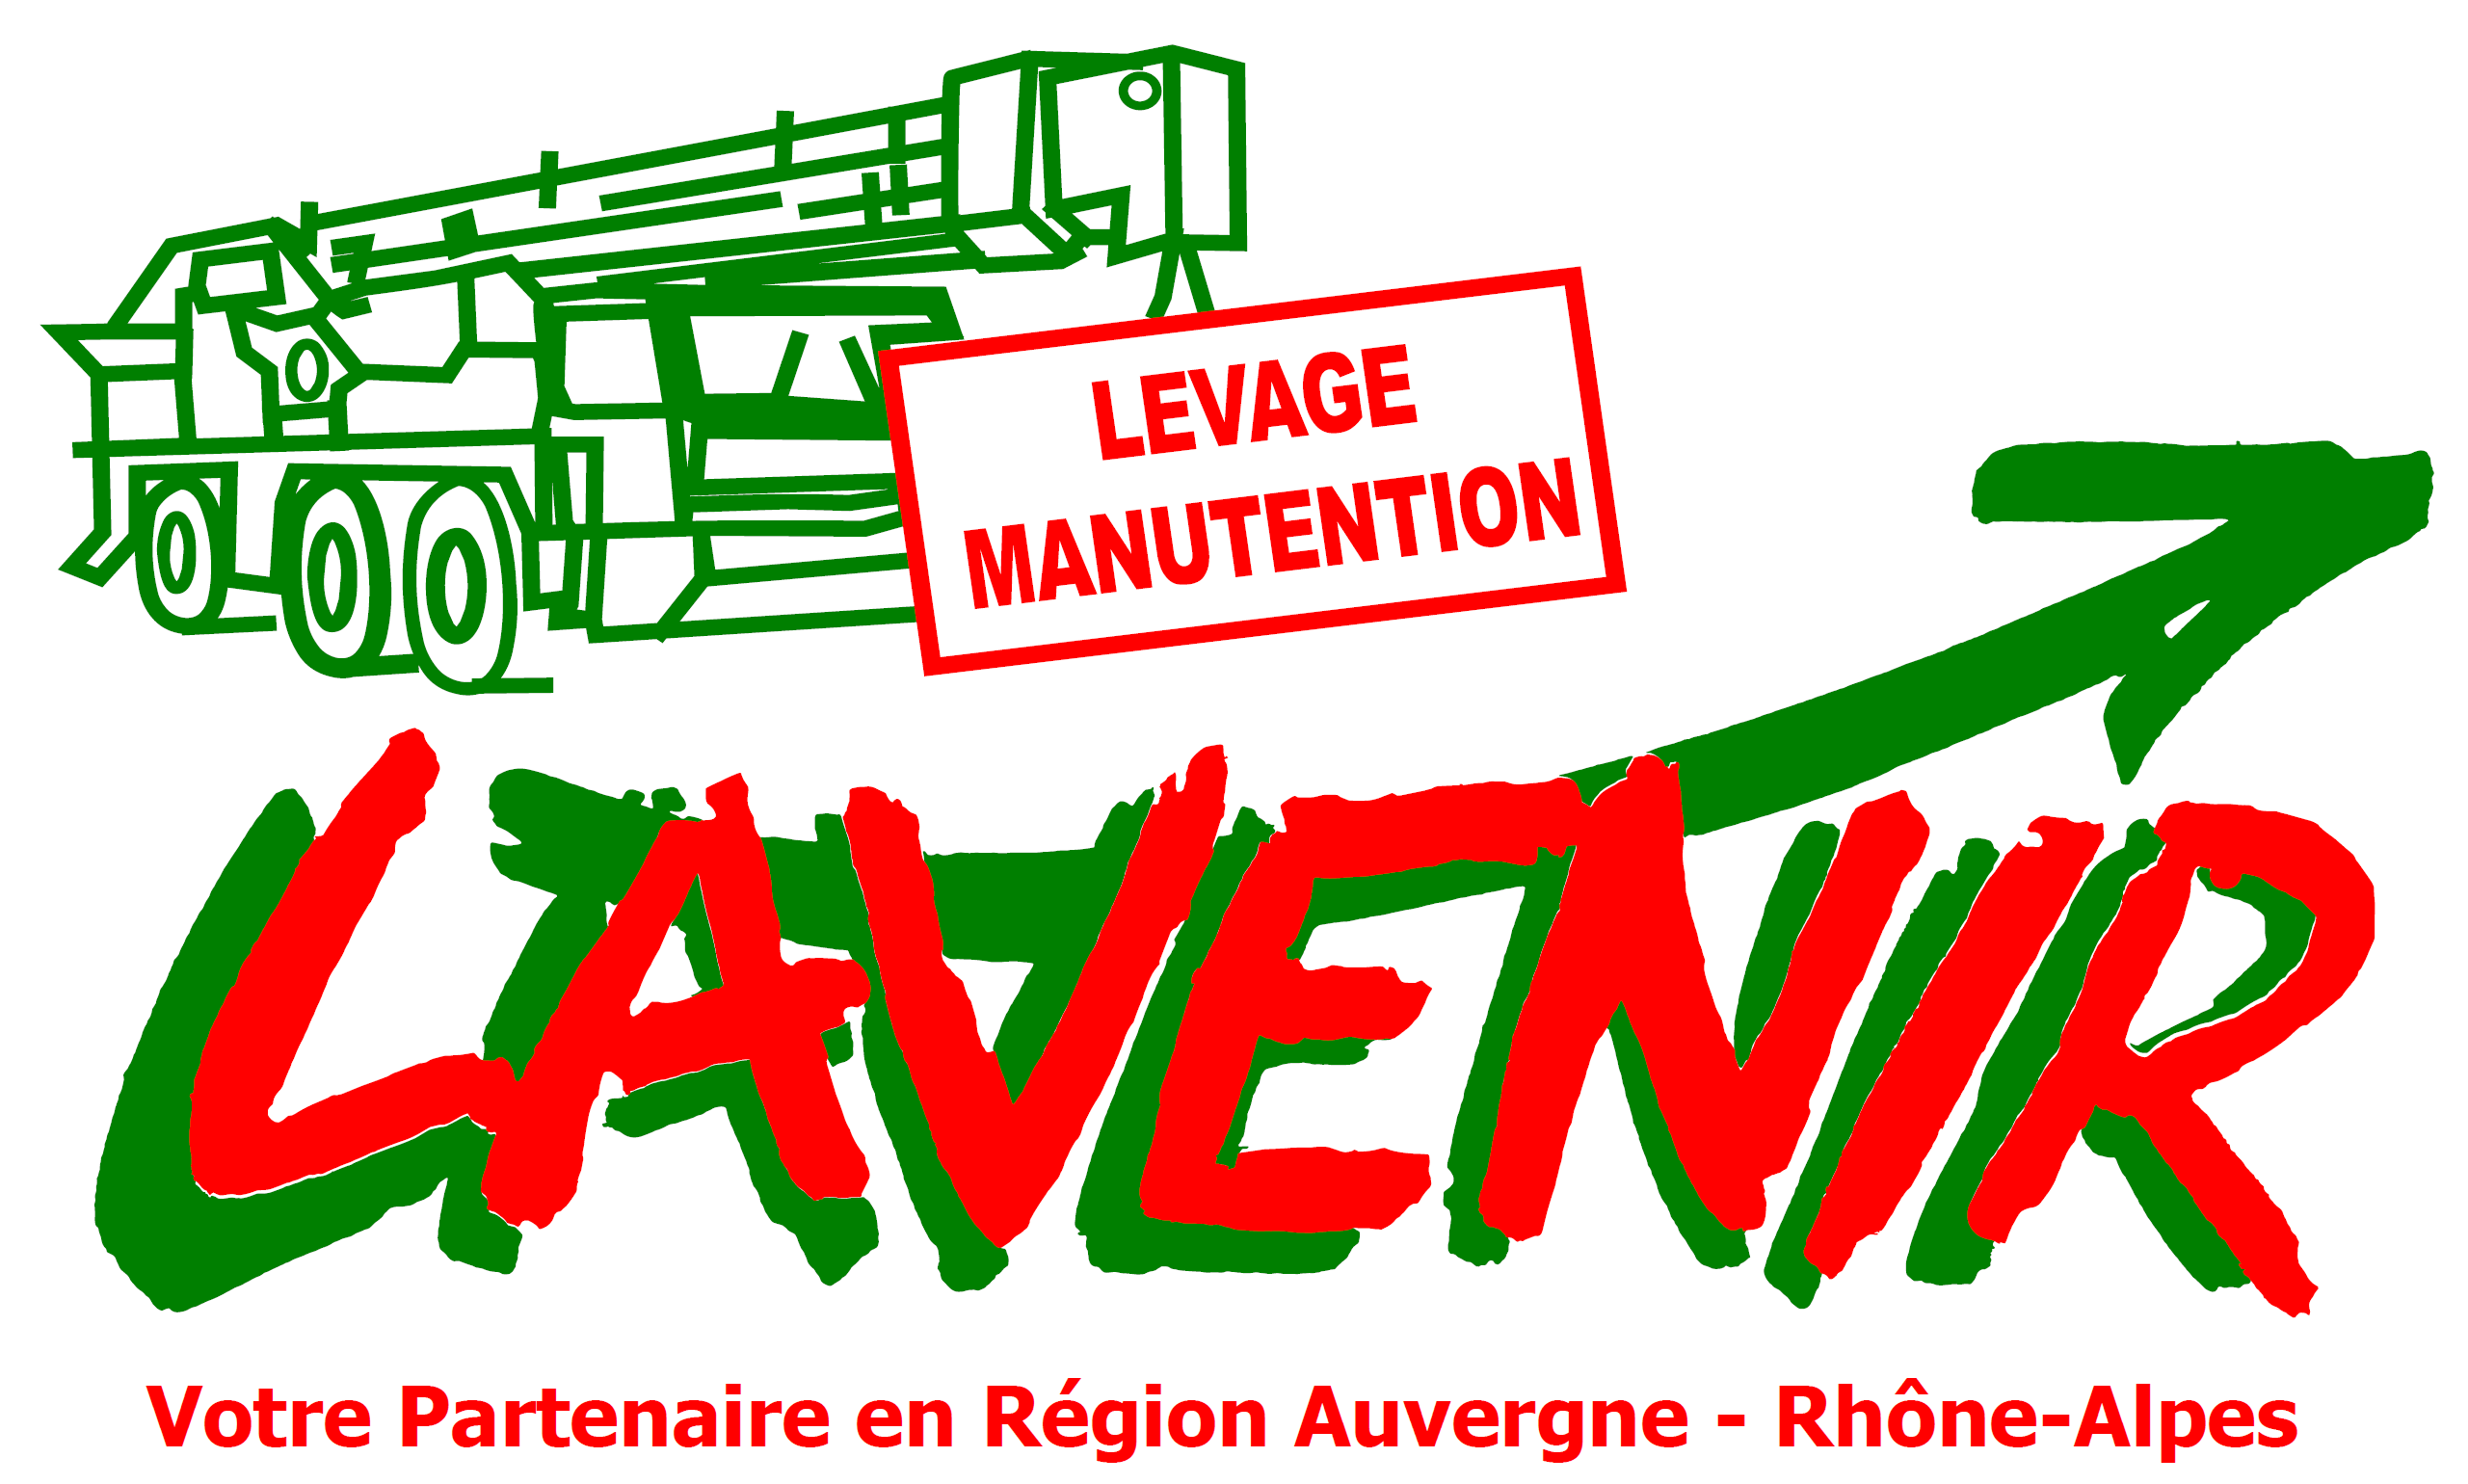 logo-lavenir.png